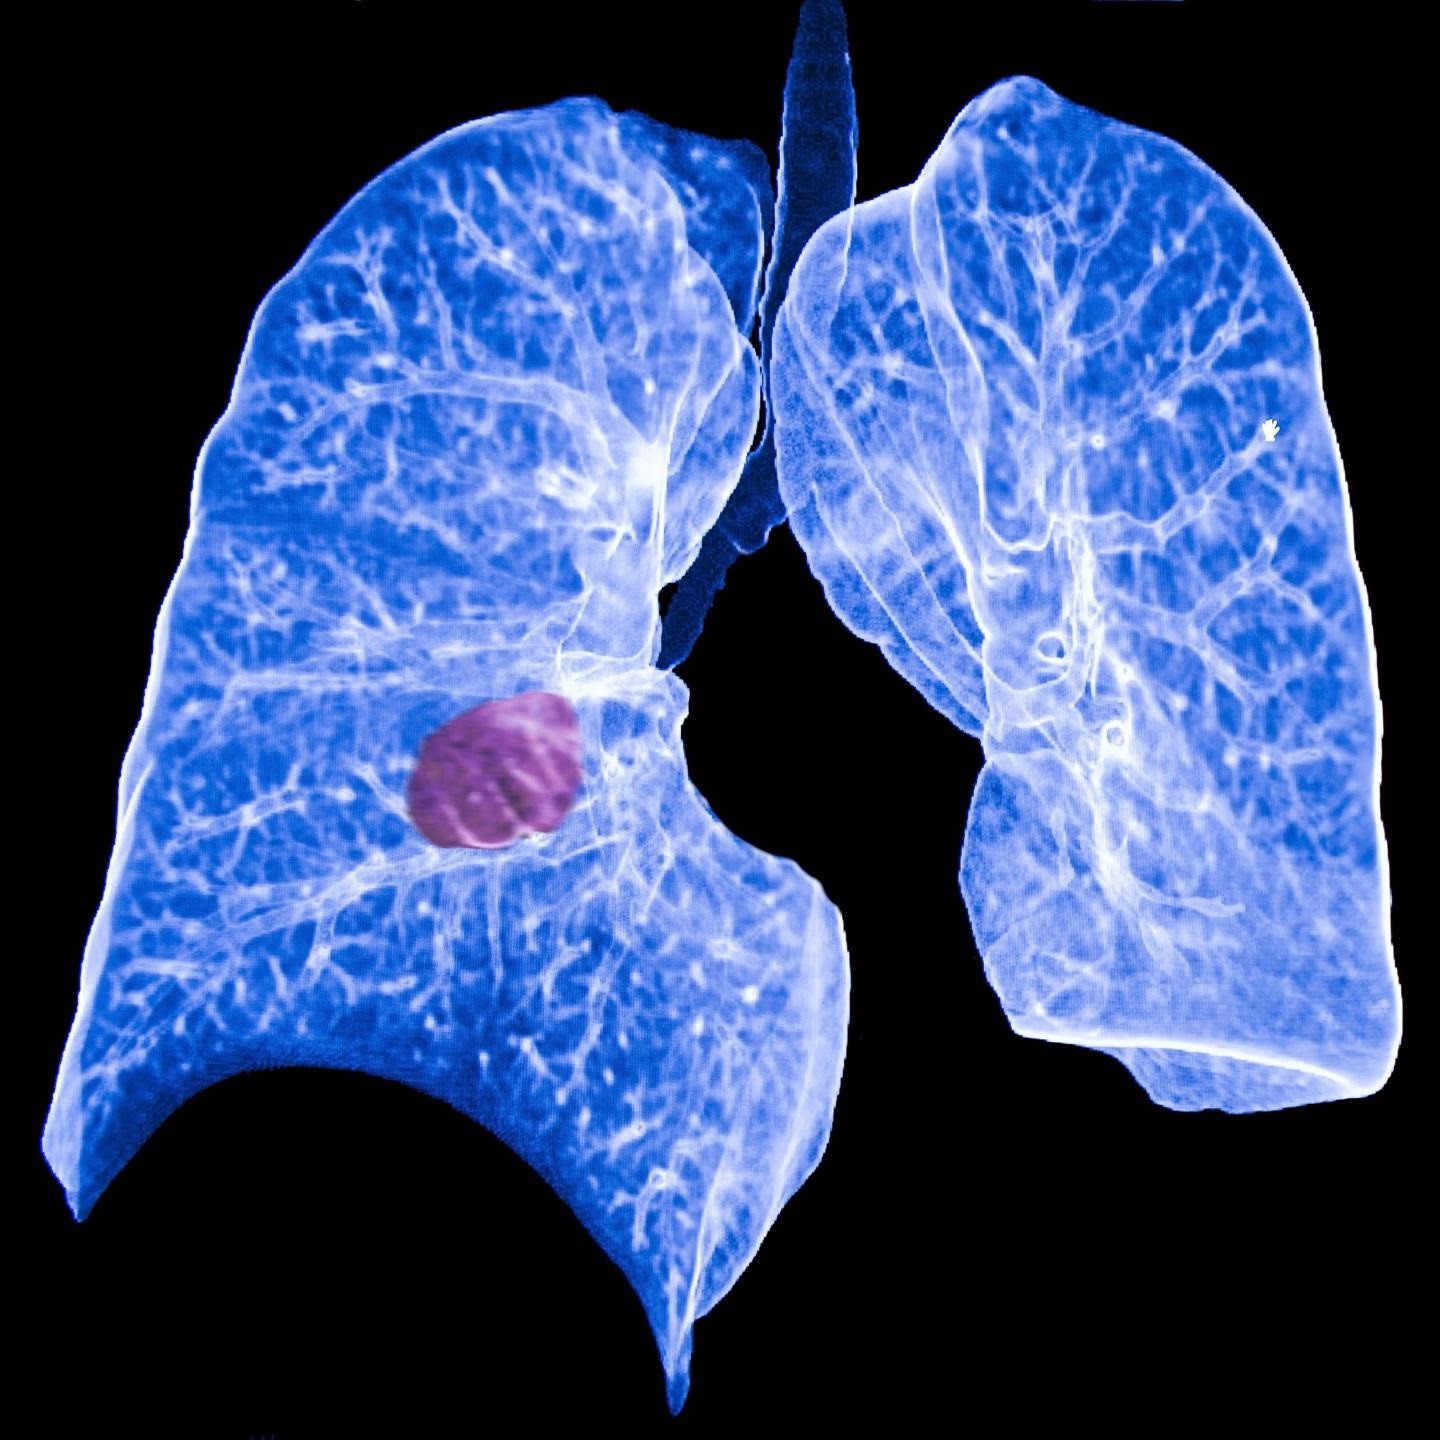 Cáncer de pulmón (ESPAÑA EUROPA MADRID SALUD ATS)
